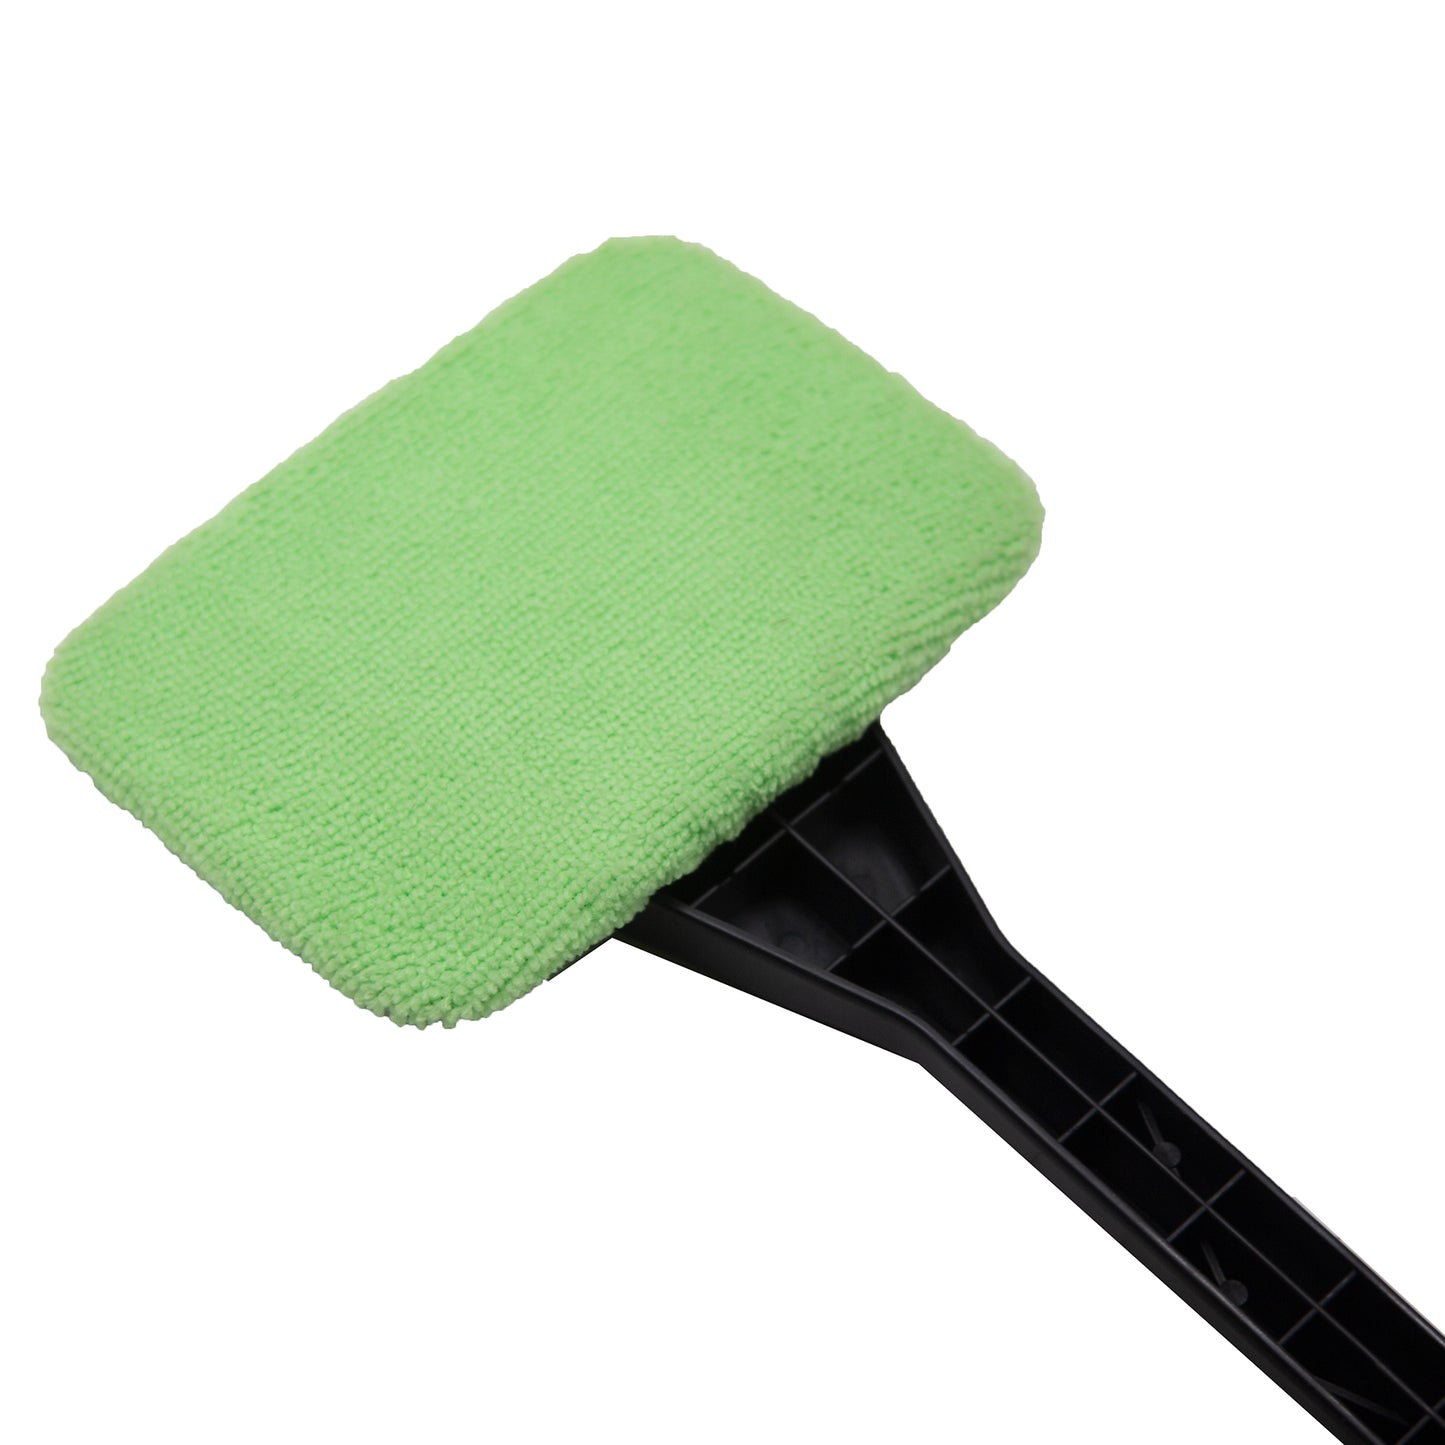 Windshield Wiper- Ultra Clean Microfiber Ultra Absorbent